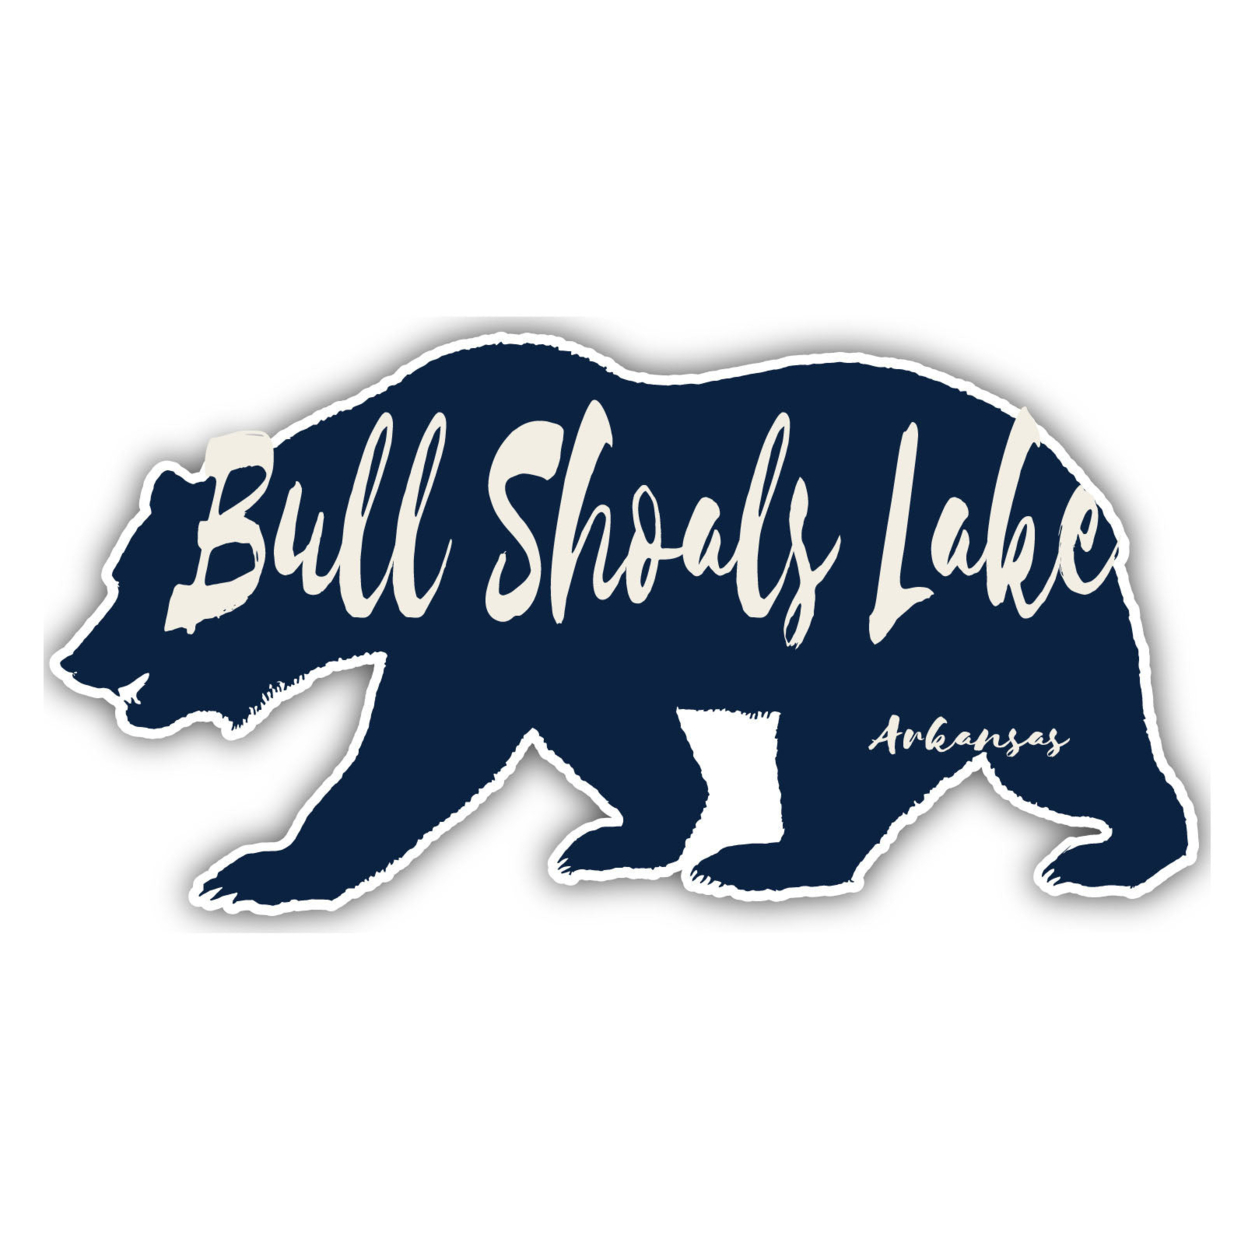 Bull Shoals Lake Arkansas Souvenir Decorative Stickers (Choose Theme And Size) - 4-Pack, 10-Inch, Adventures Awaits